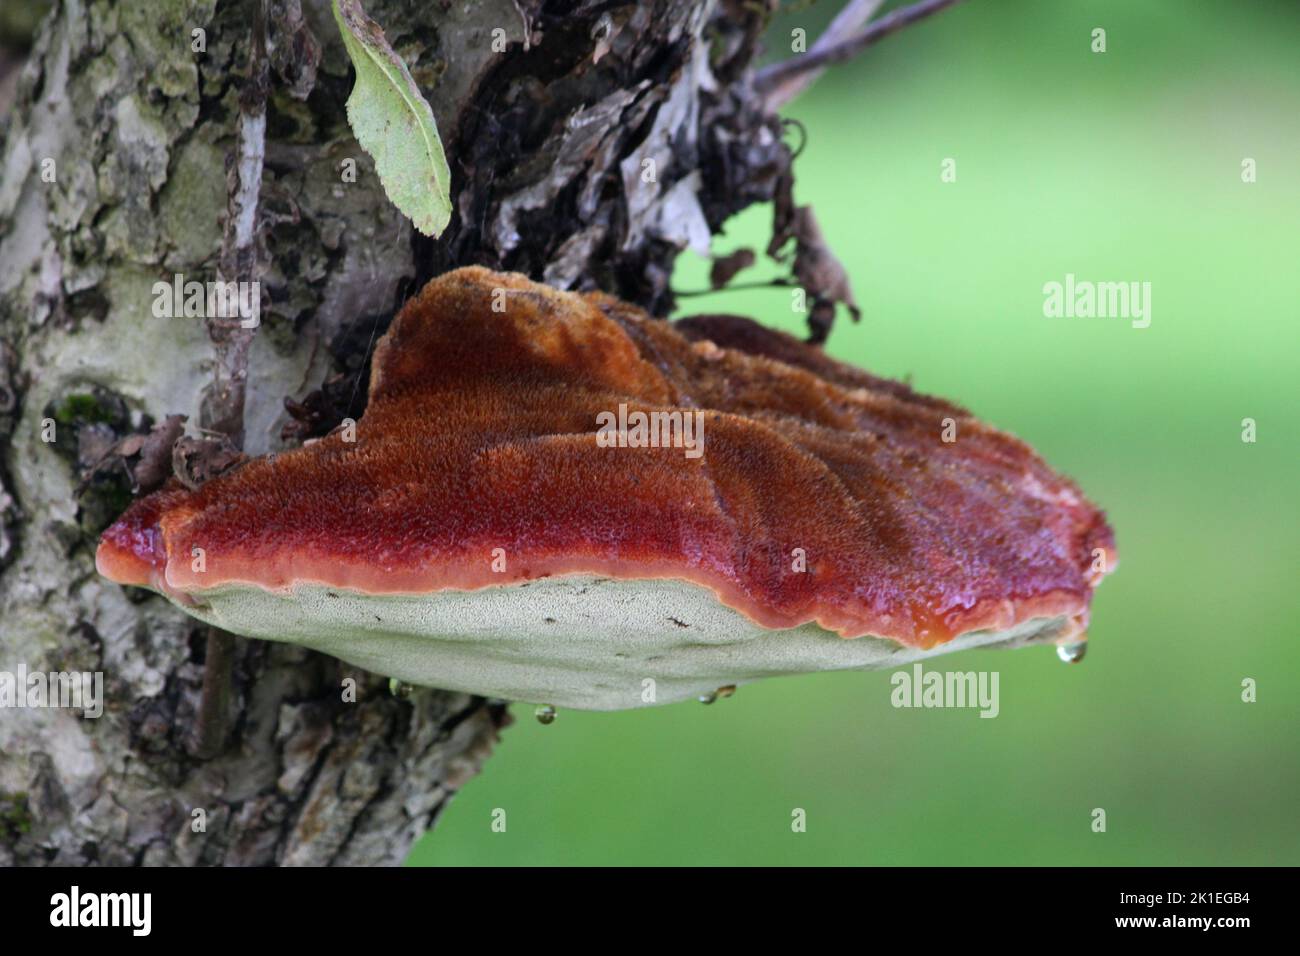 Beefsteak (Fistulina hepatica) fungus on tree trunk Stock Photo